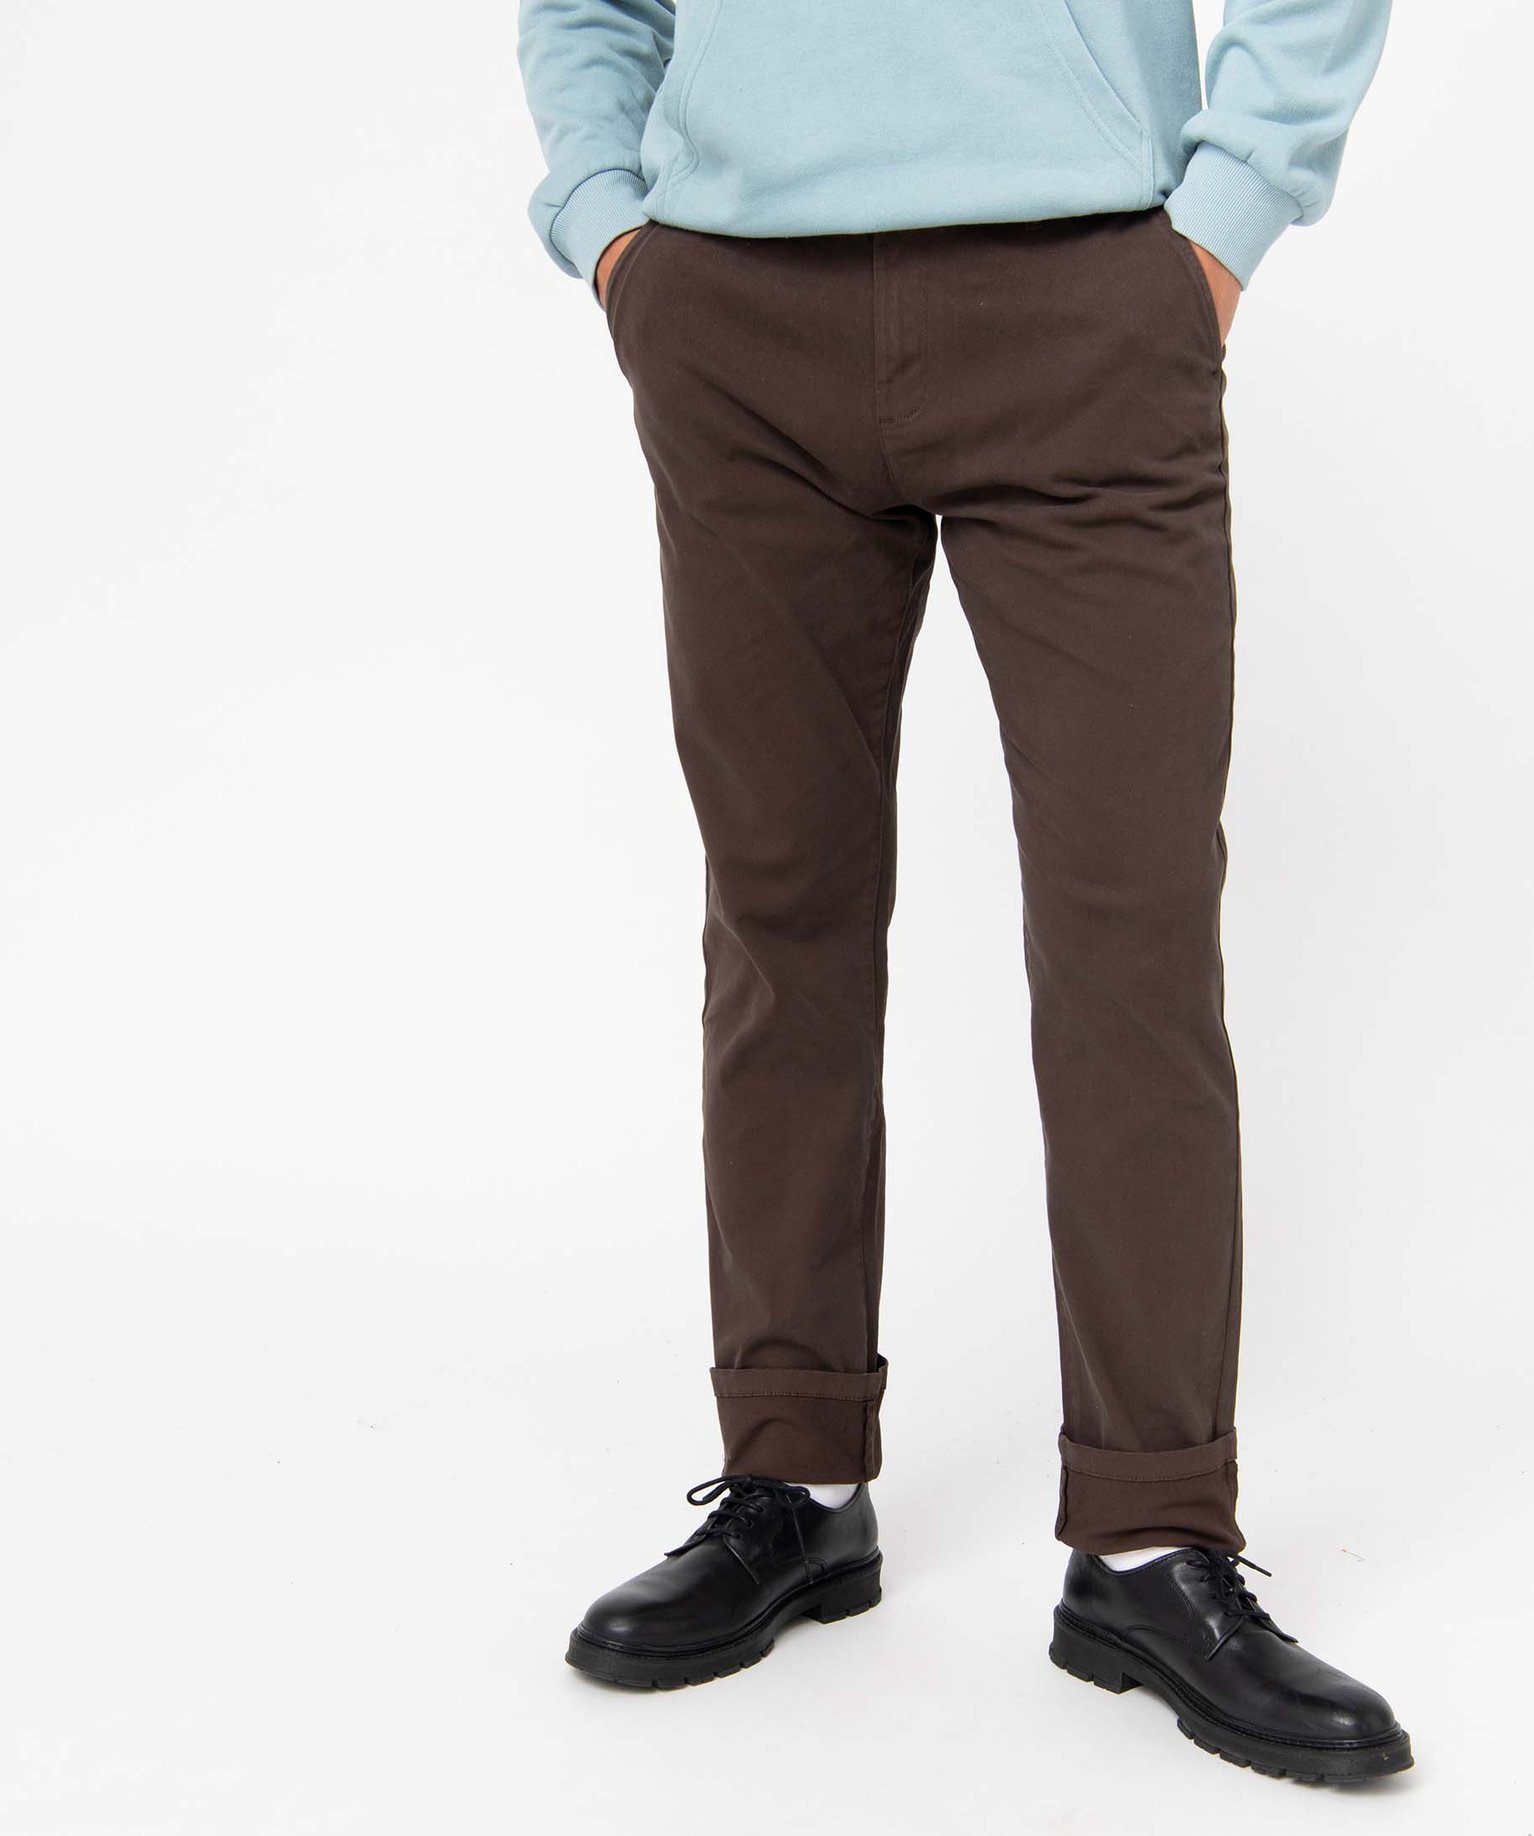 pantalon chino homme en coton stretch brun pantalons de costume